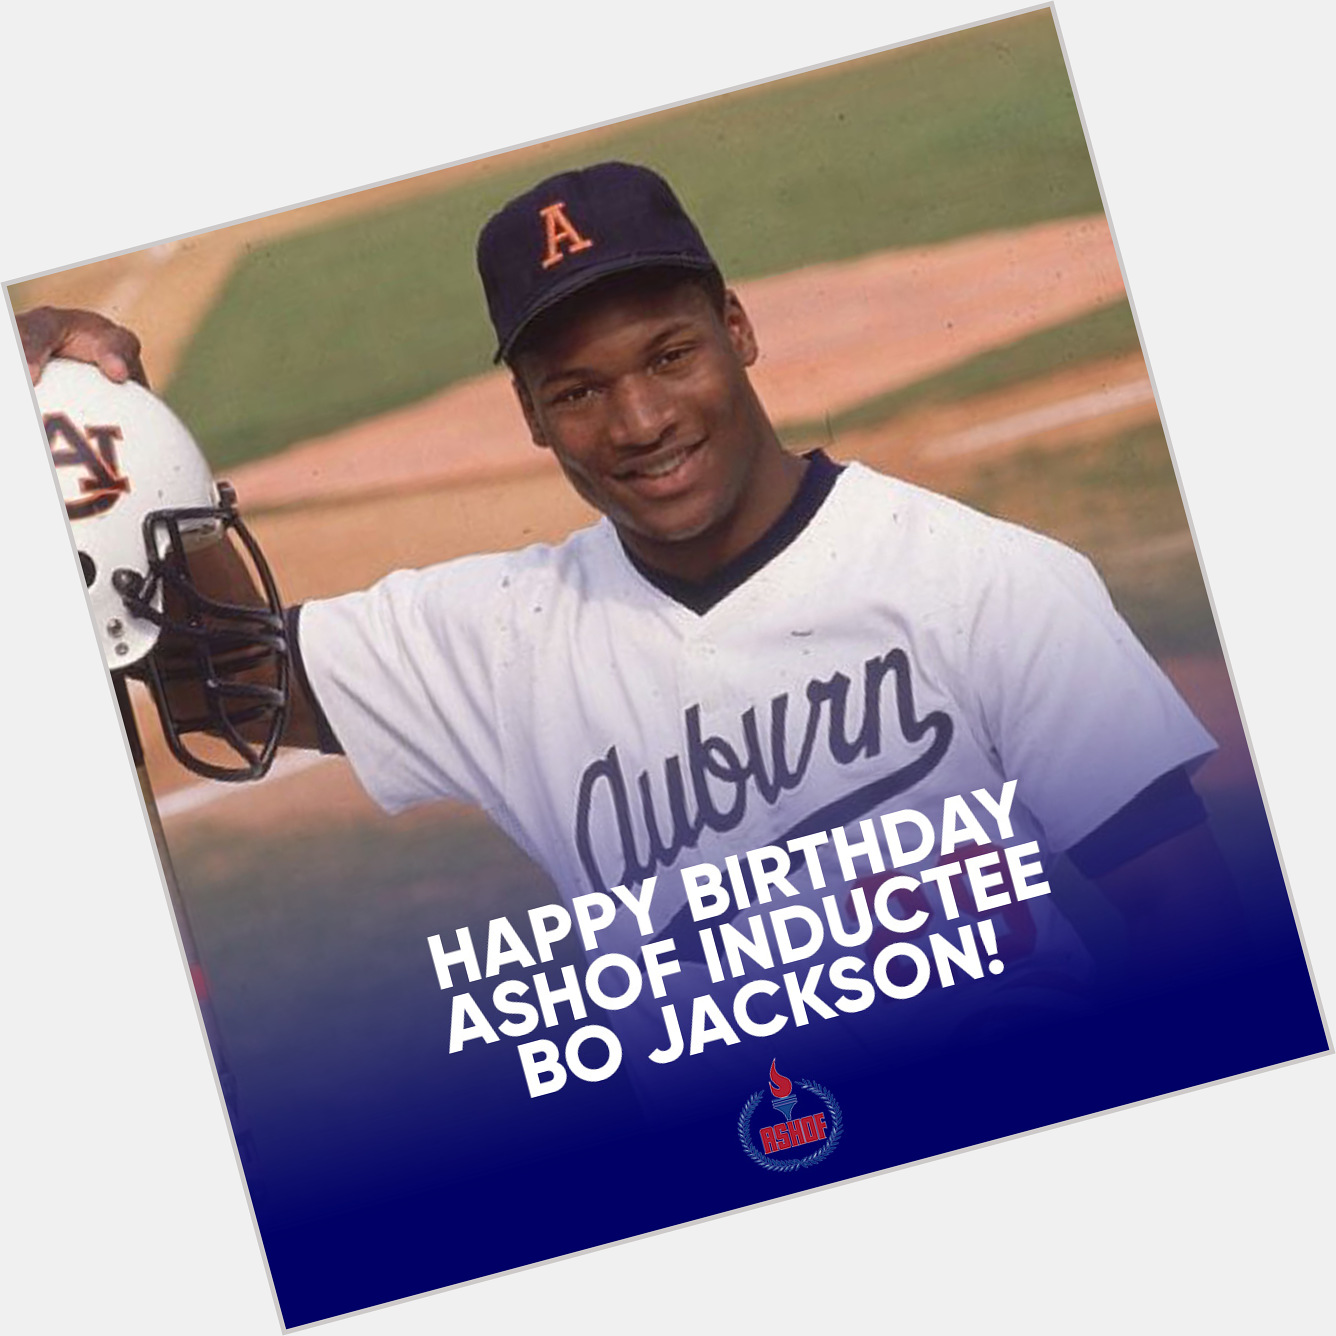 Join us in wishing Bo Jackson a happy birthday! 